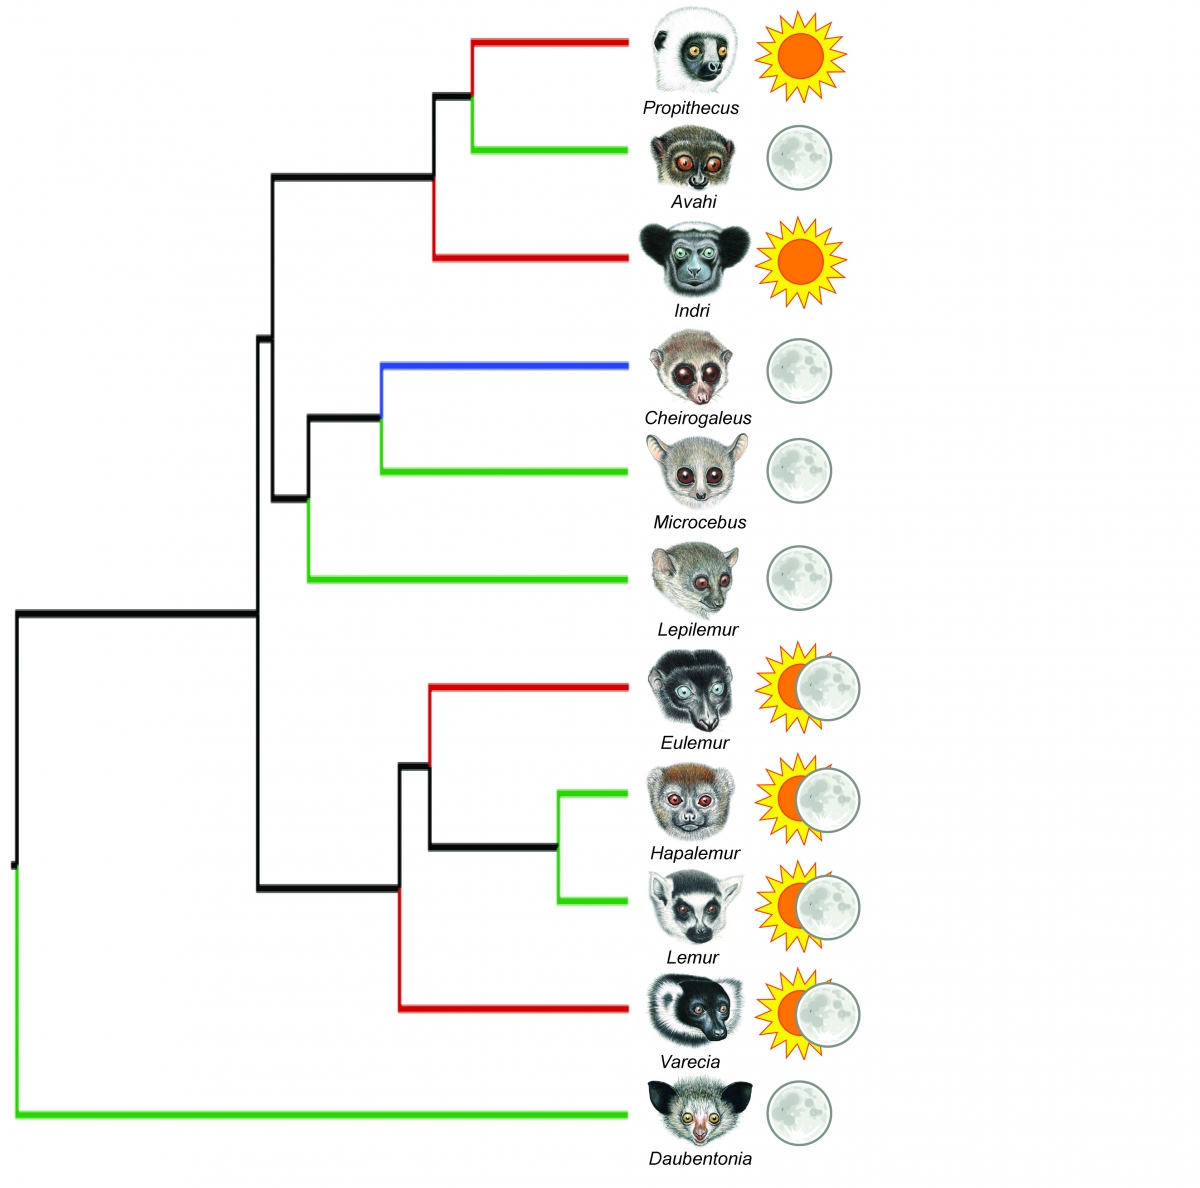 Phylogeny tree of Lemurs